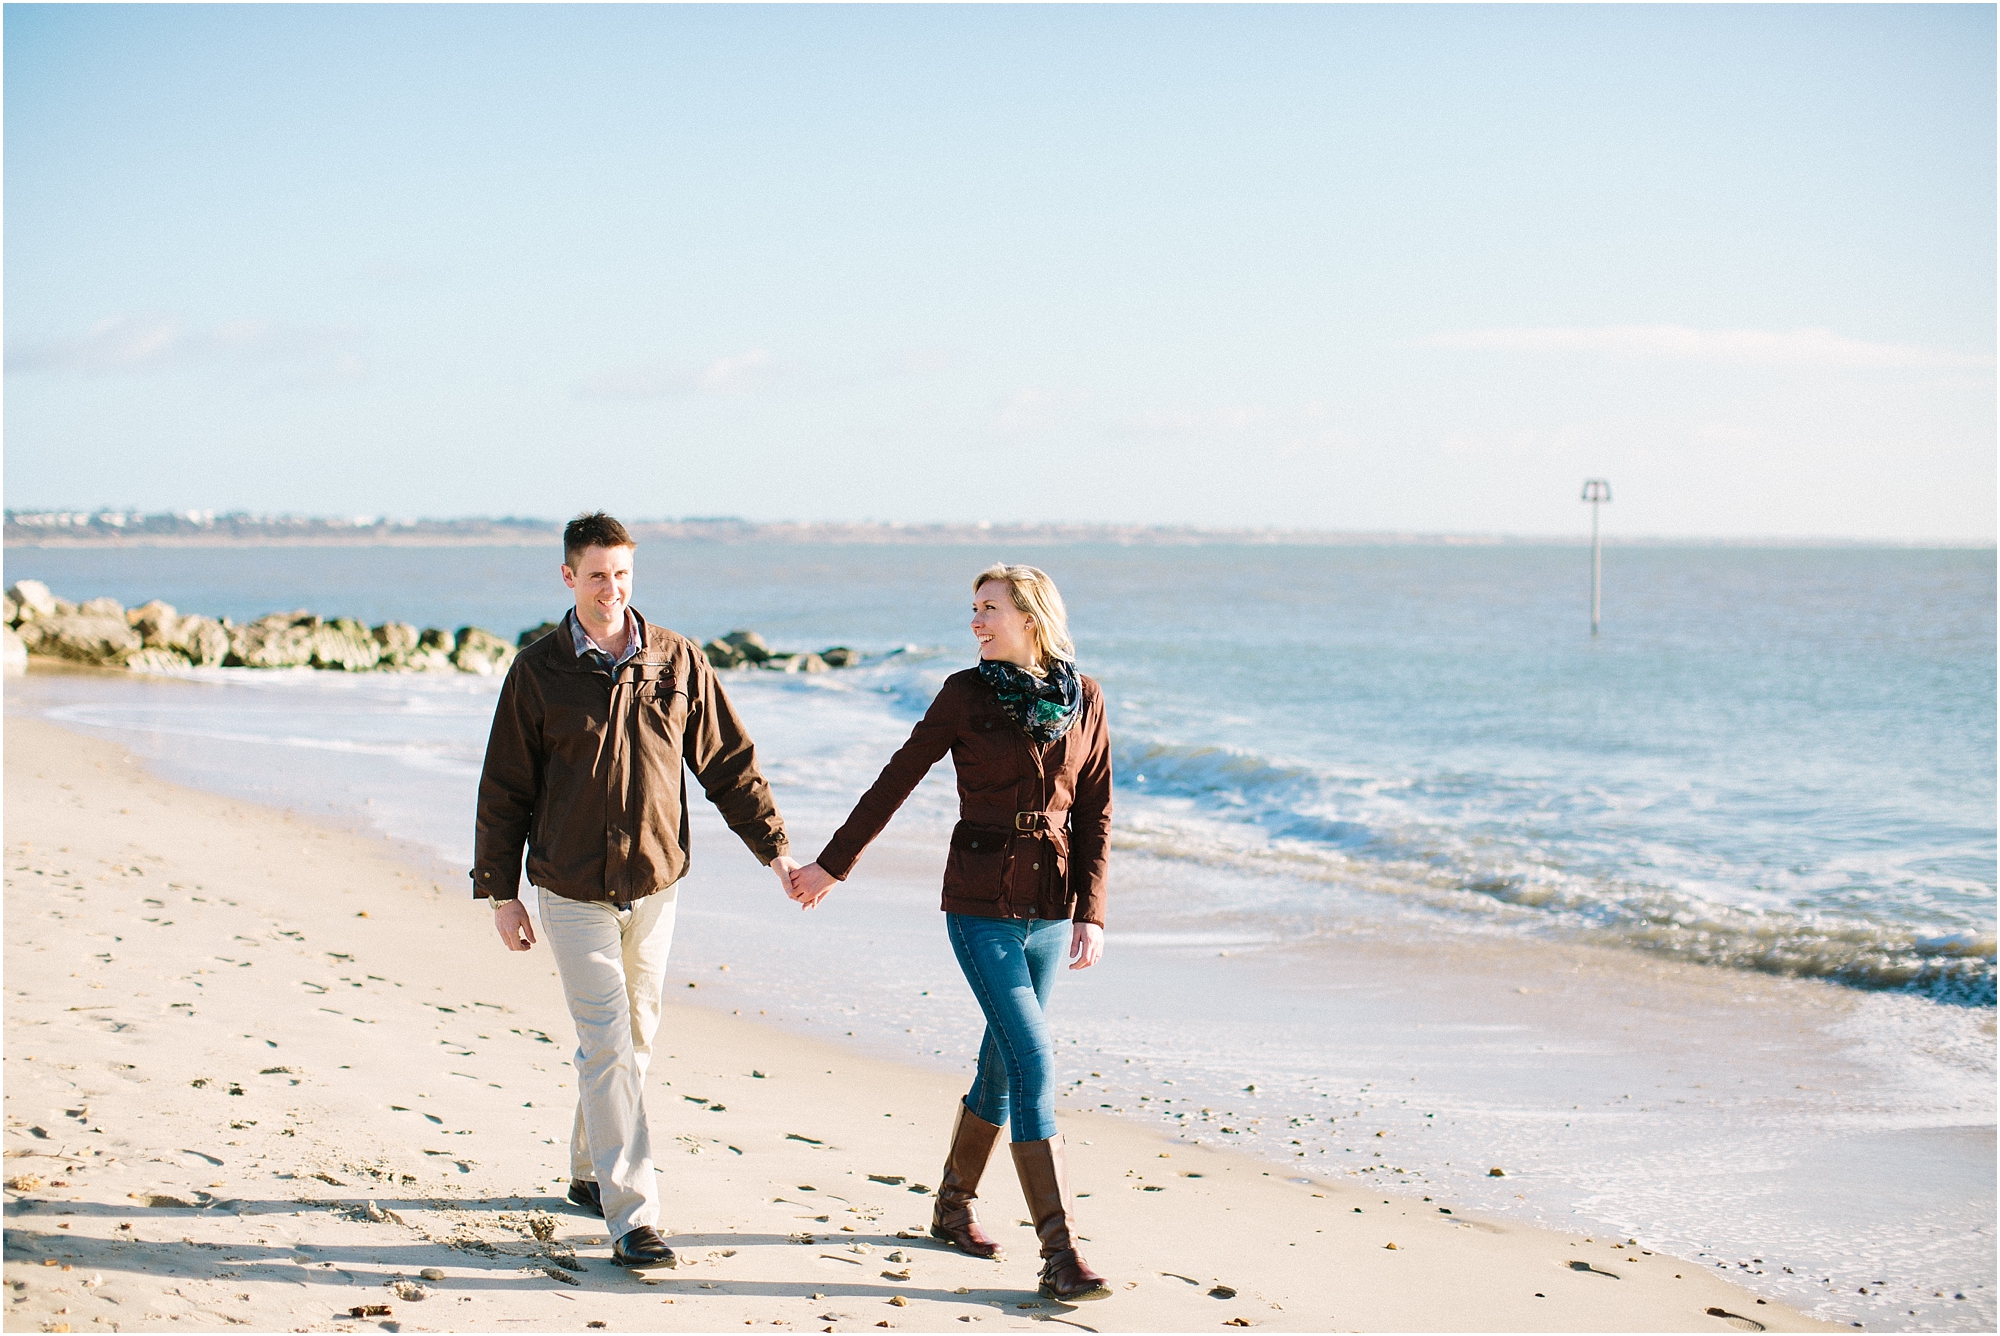 Couple walking along beach holding hands